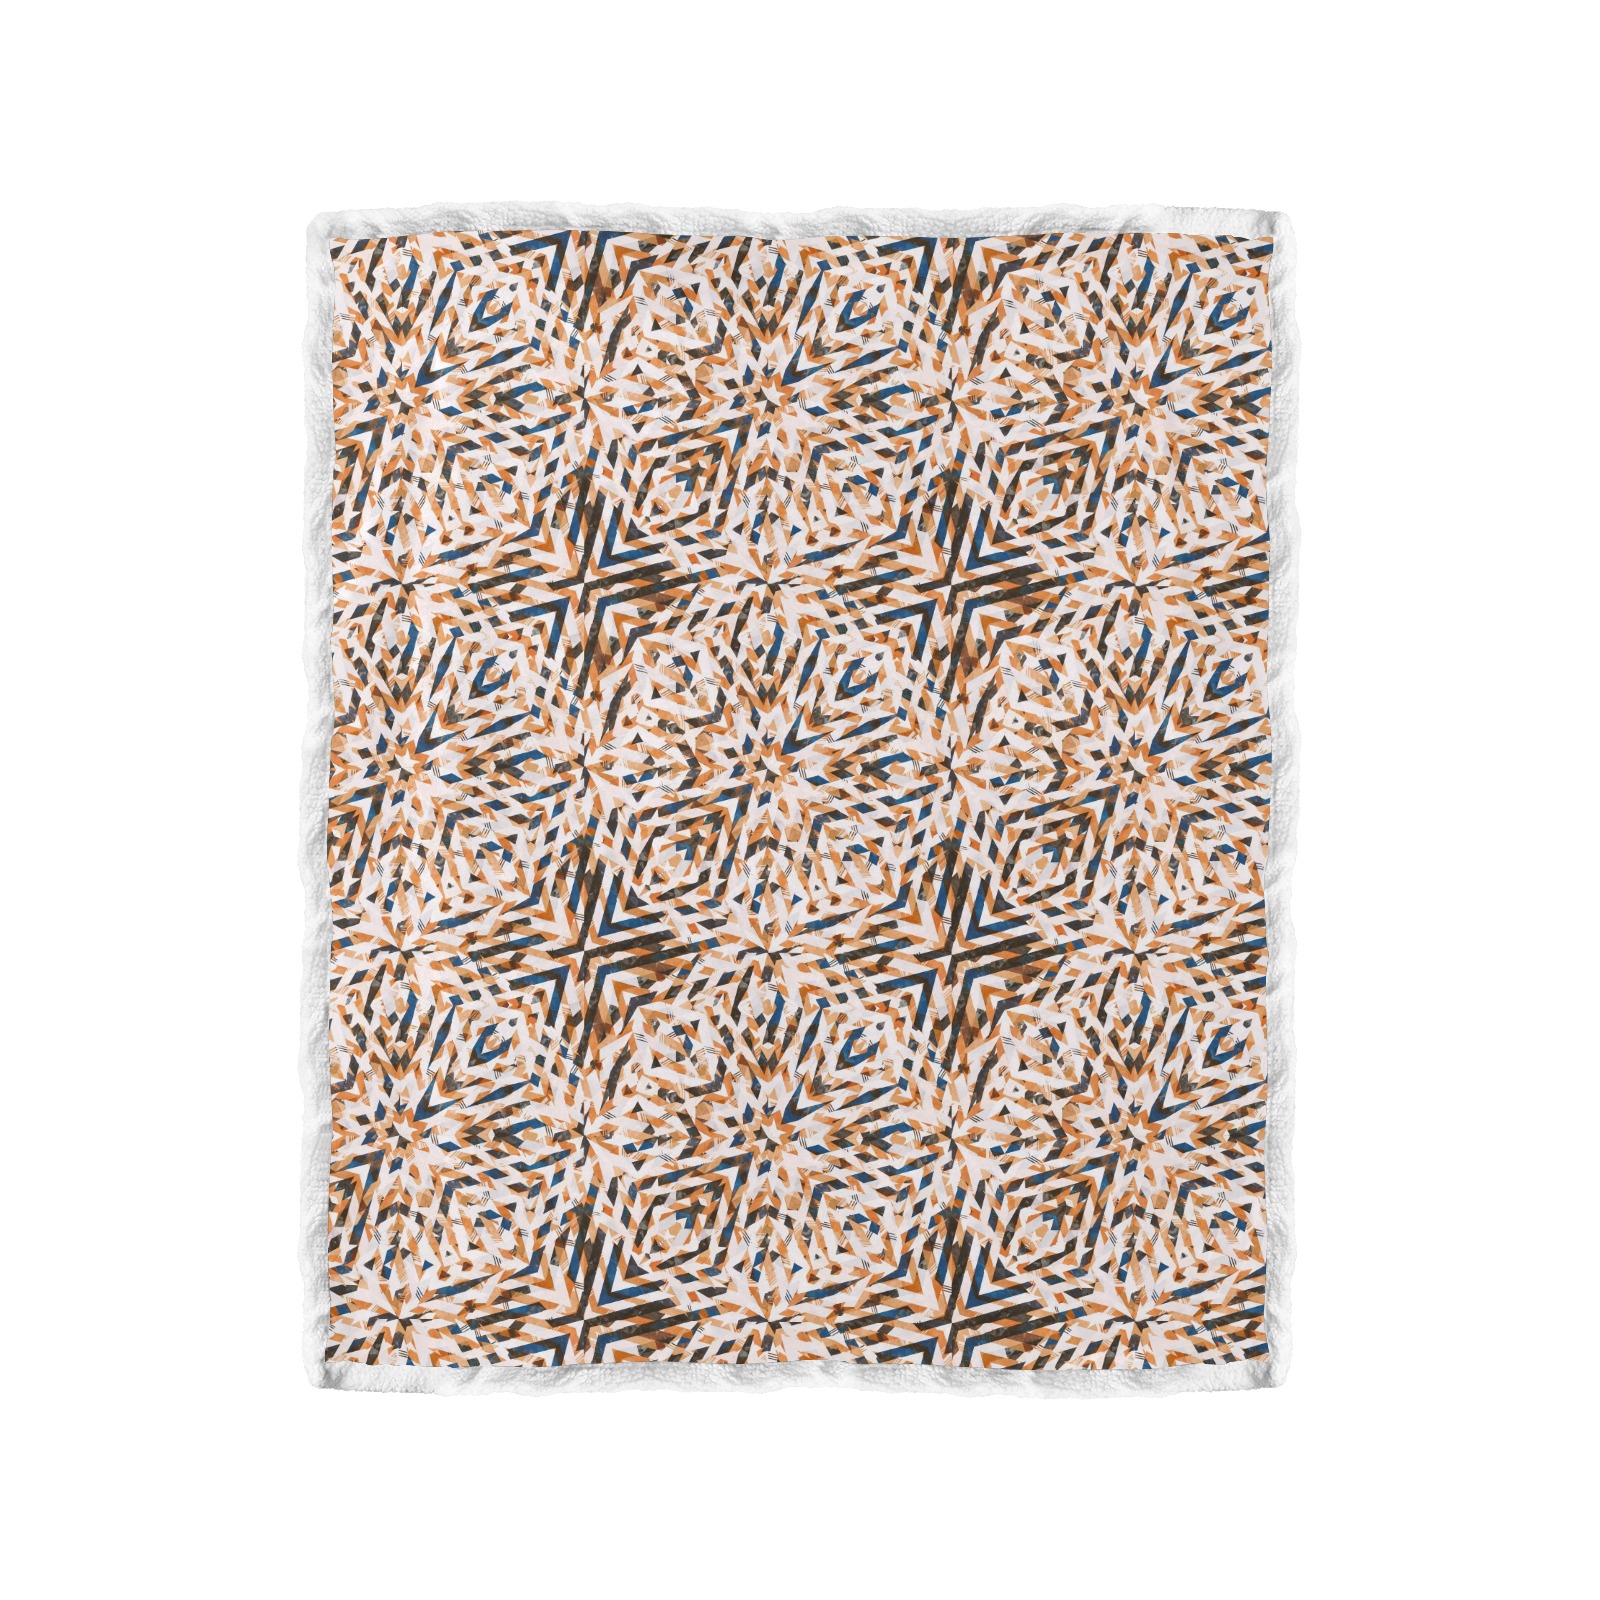 Geometric vintage mosaic 23 Double Layer Short Plush Blanket 50"x60"